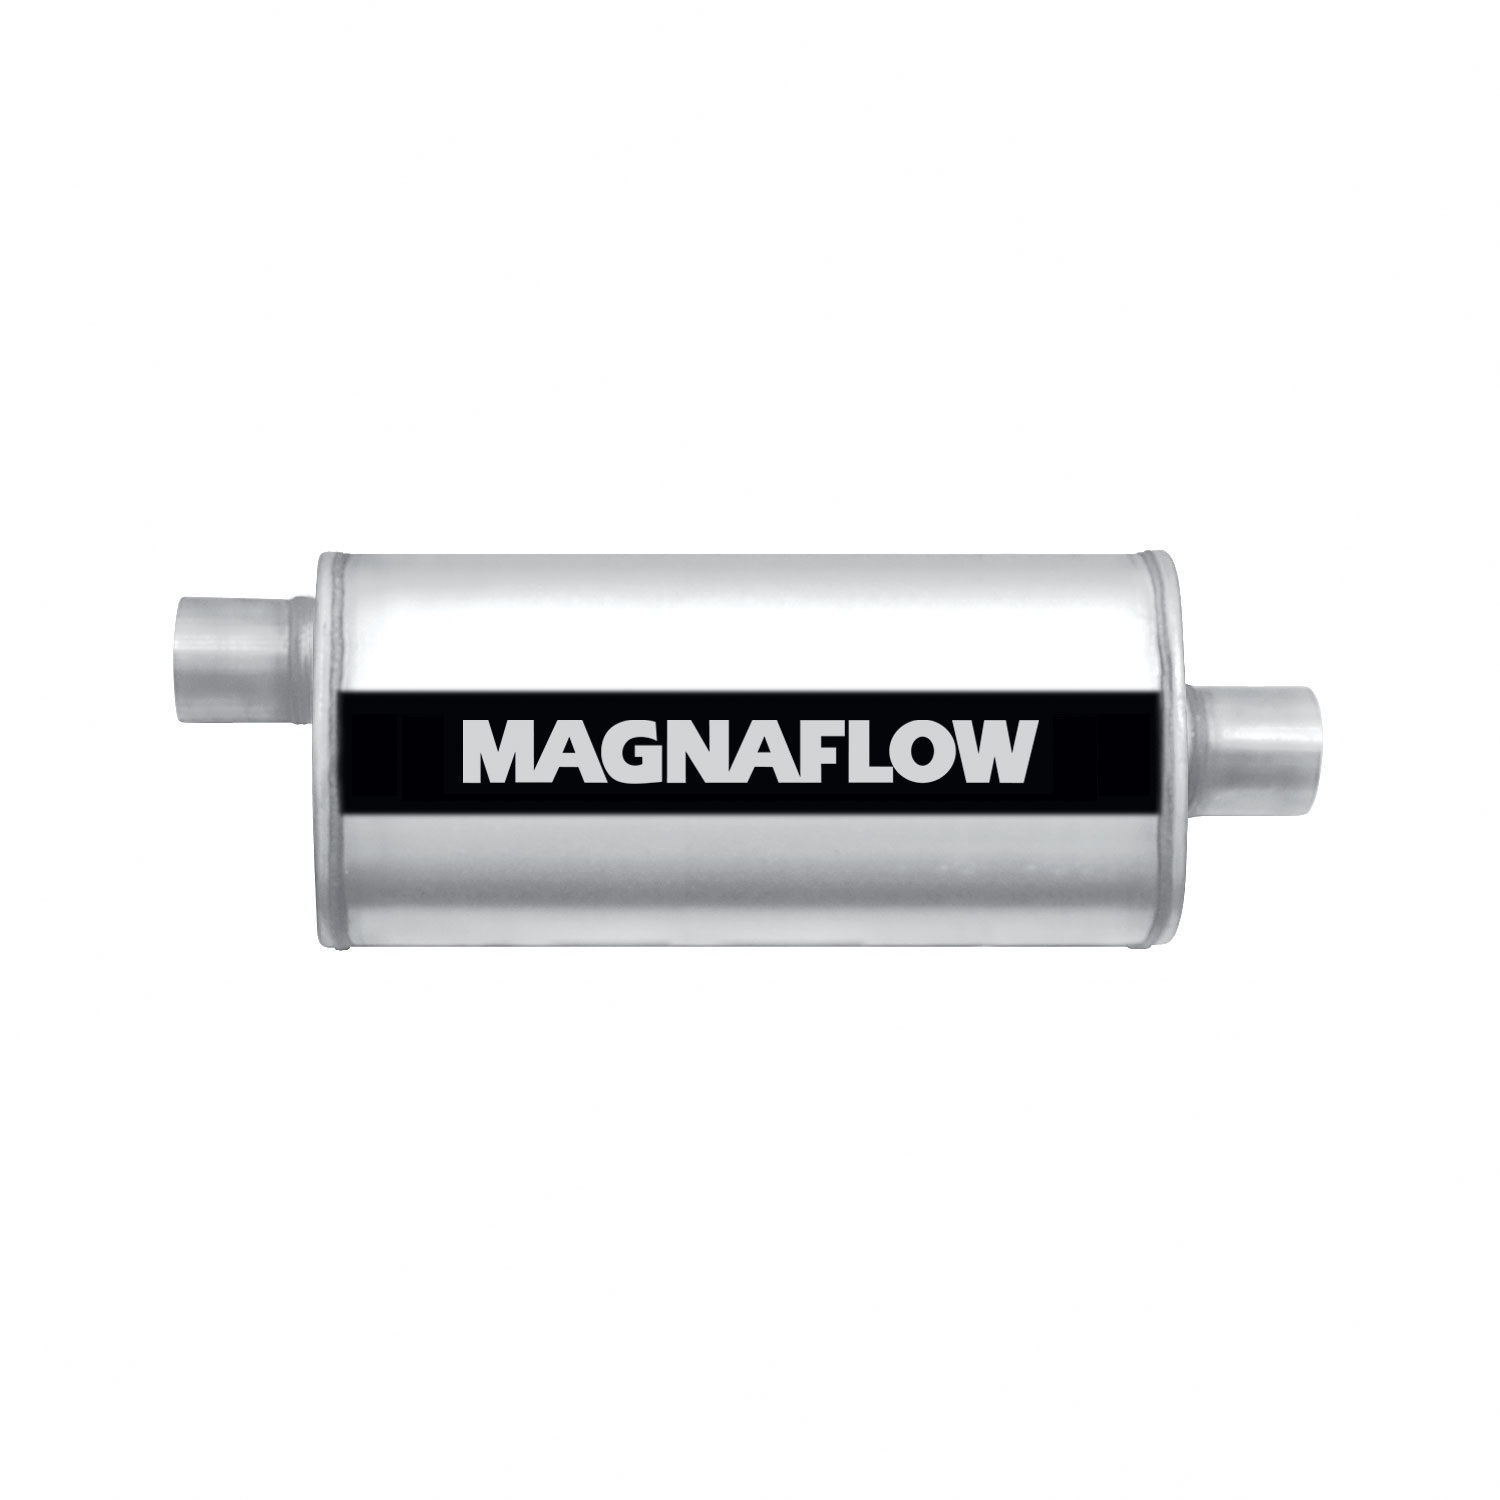 Magnaflow Performance Exhaust Magnaflow Performance Exhaust 12255 Stainless Steel Muffler